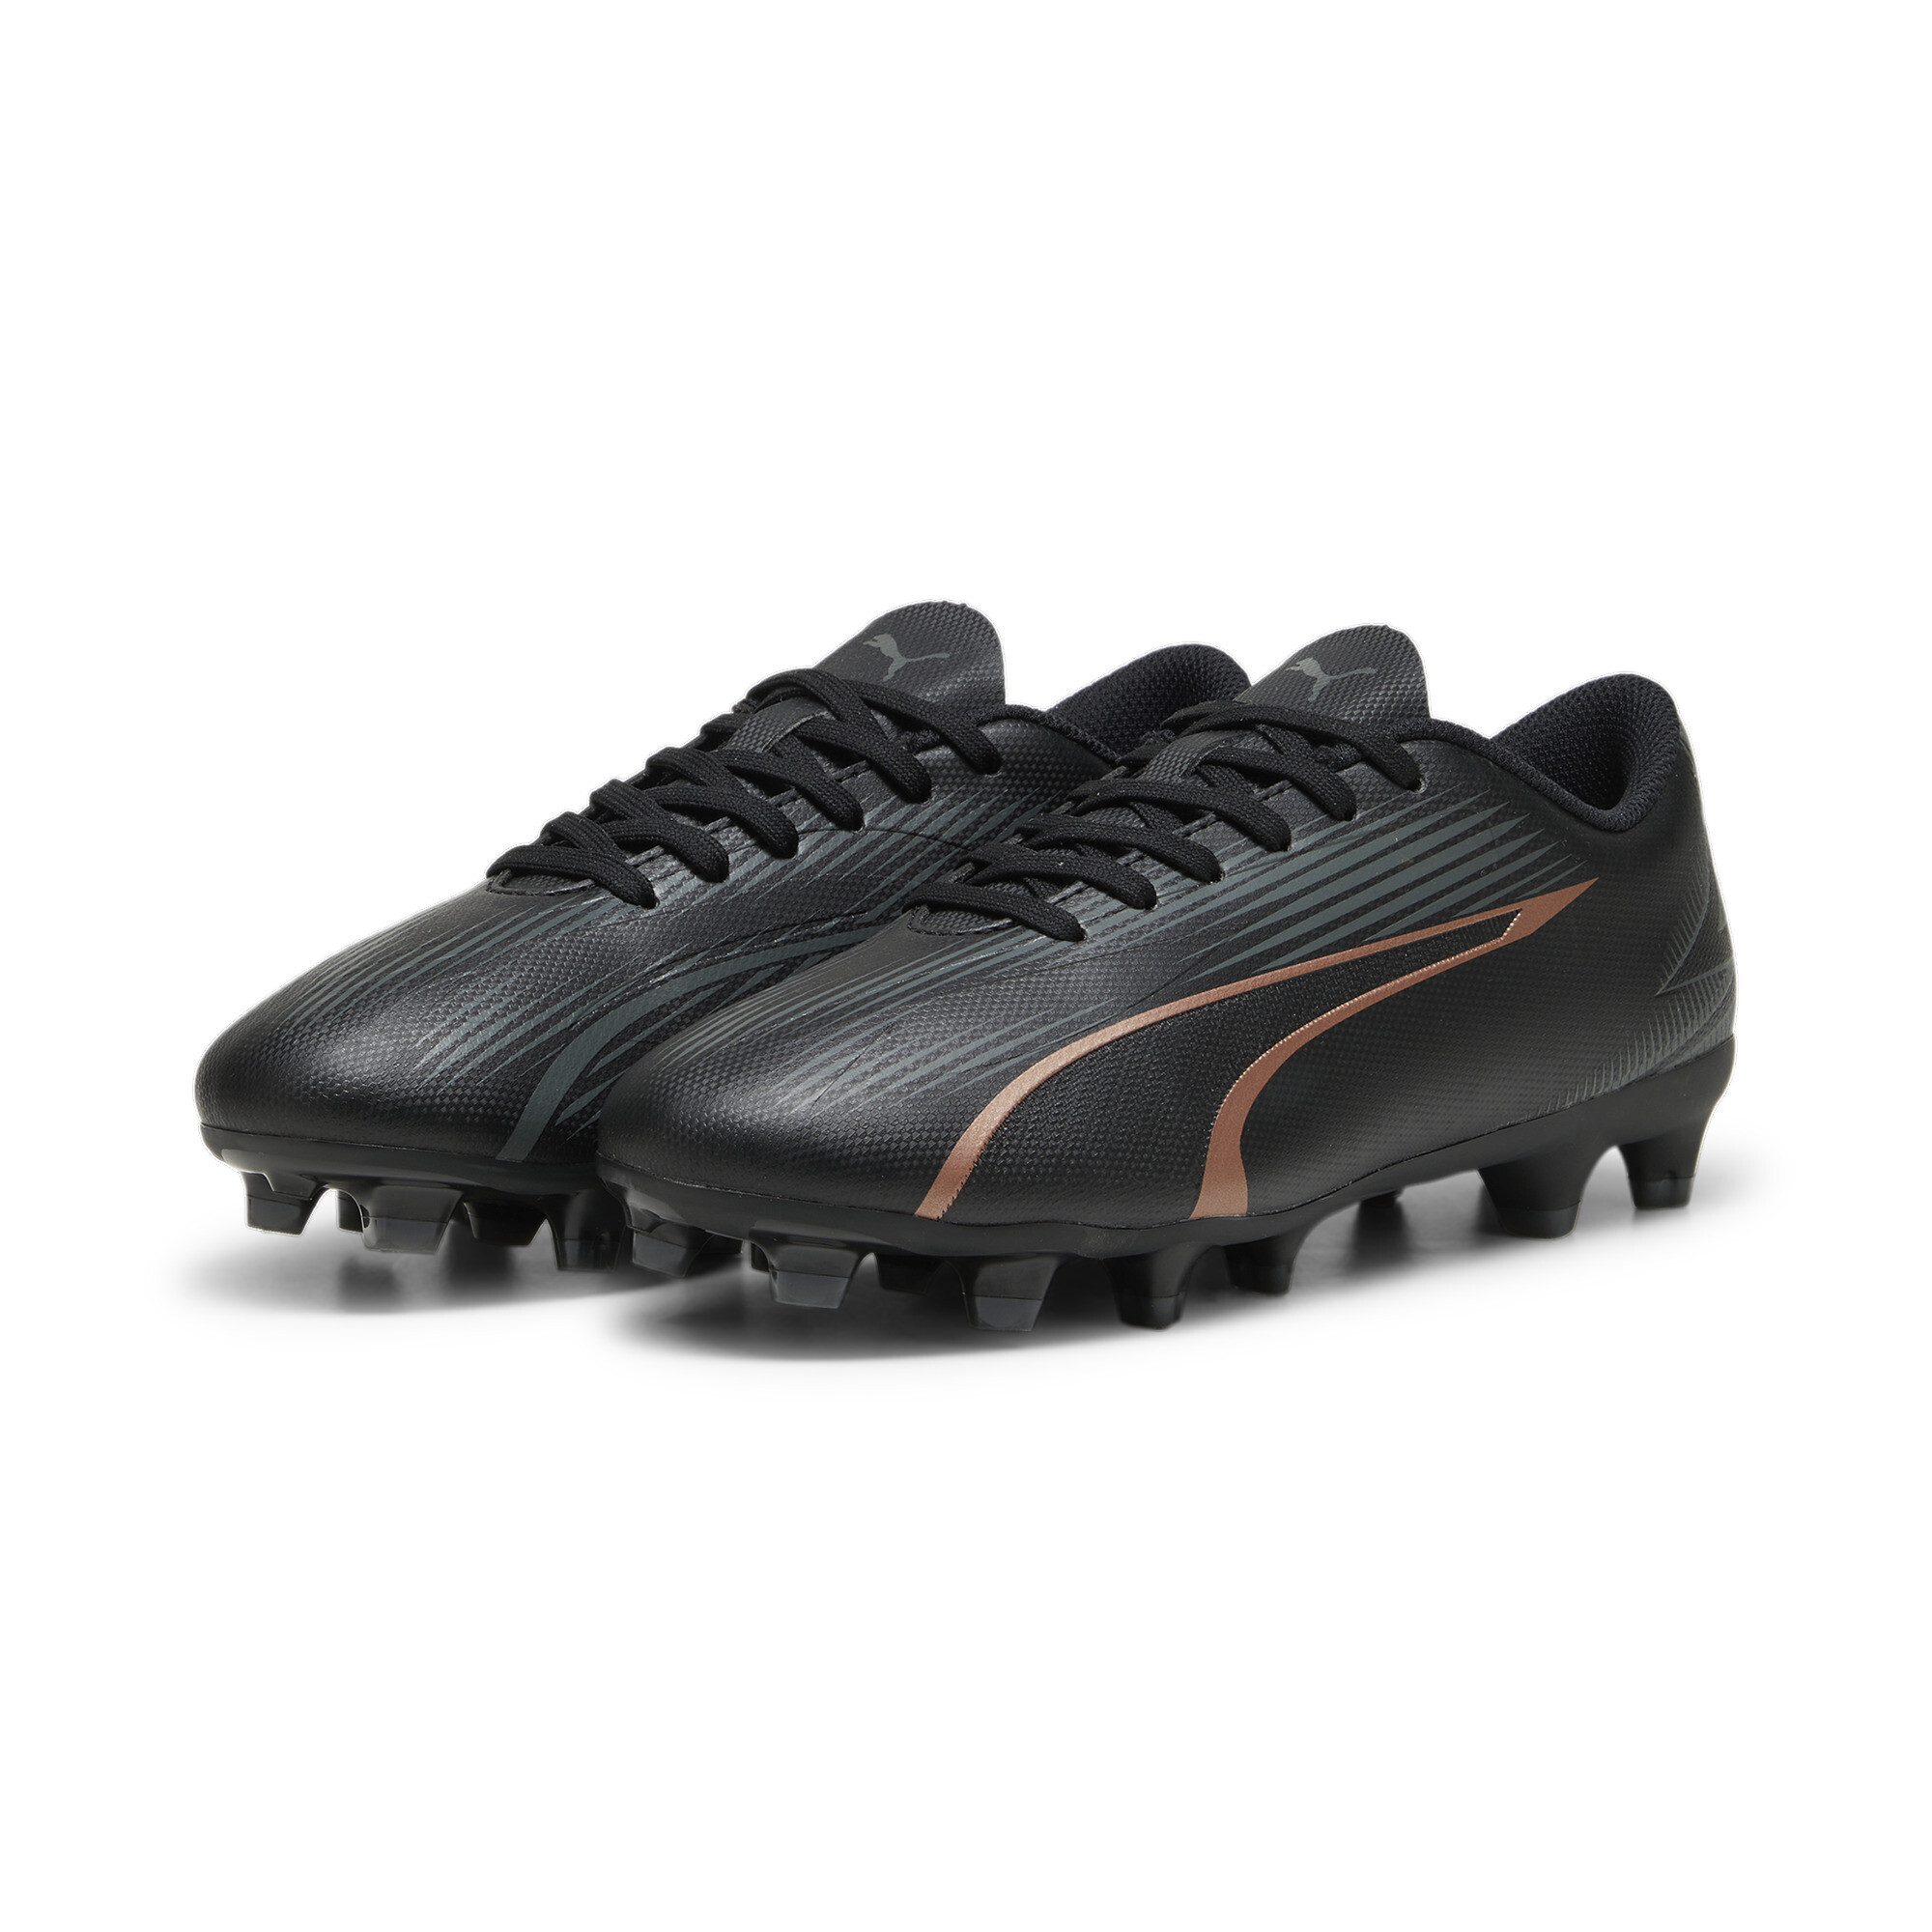 PUMA ULTRA PLAY FG/AG Youth Football Boots In Black, Size EU 34